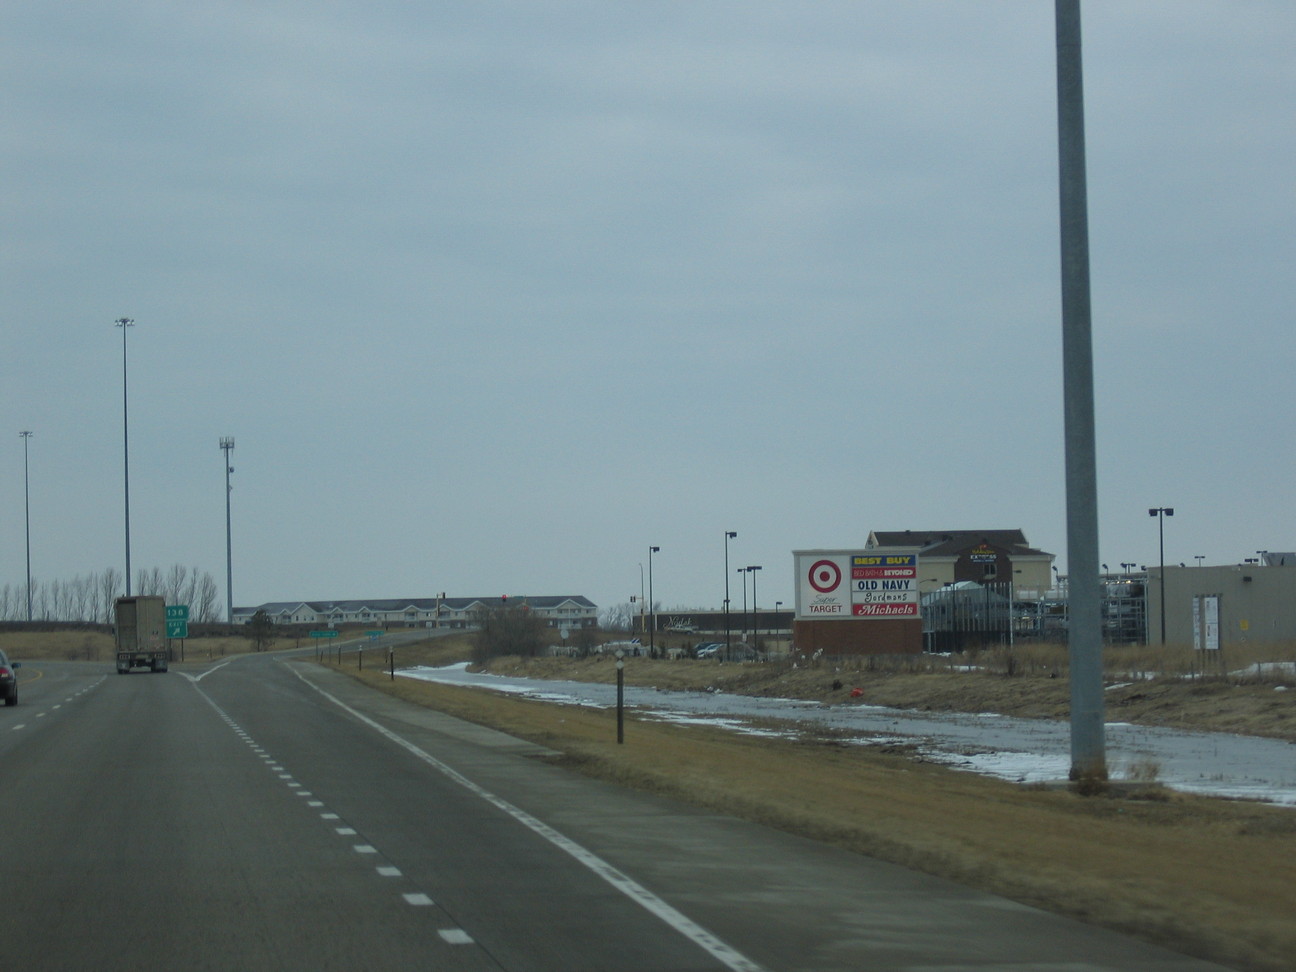 Grand Forks, ND: Highway Exit To Grand Forks